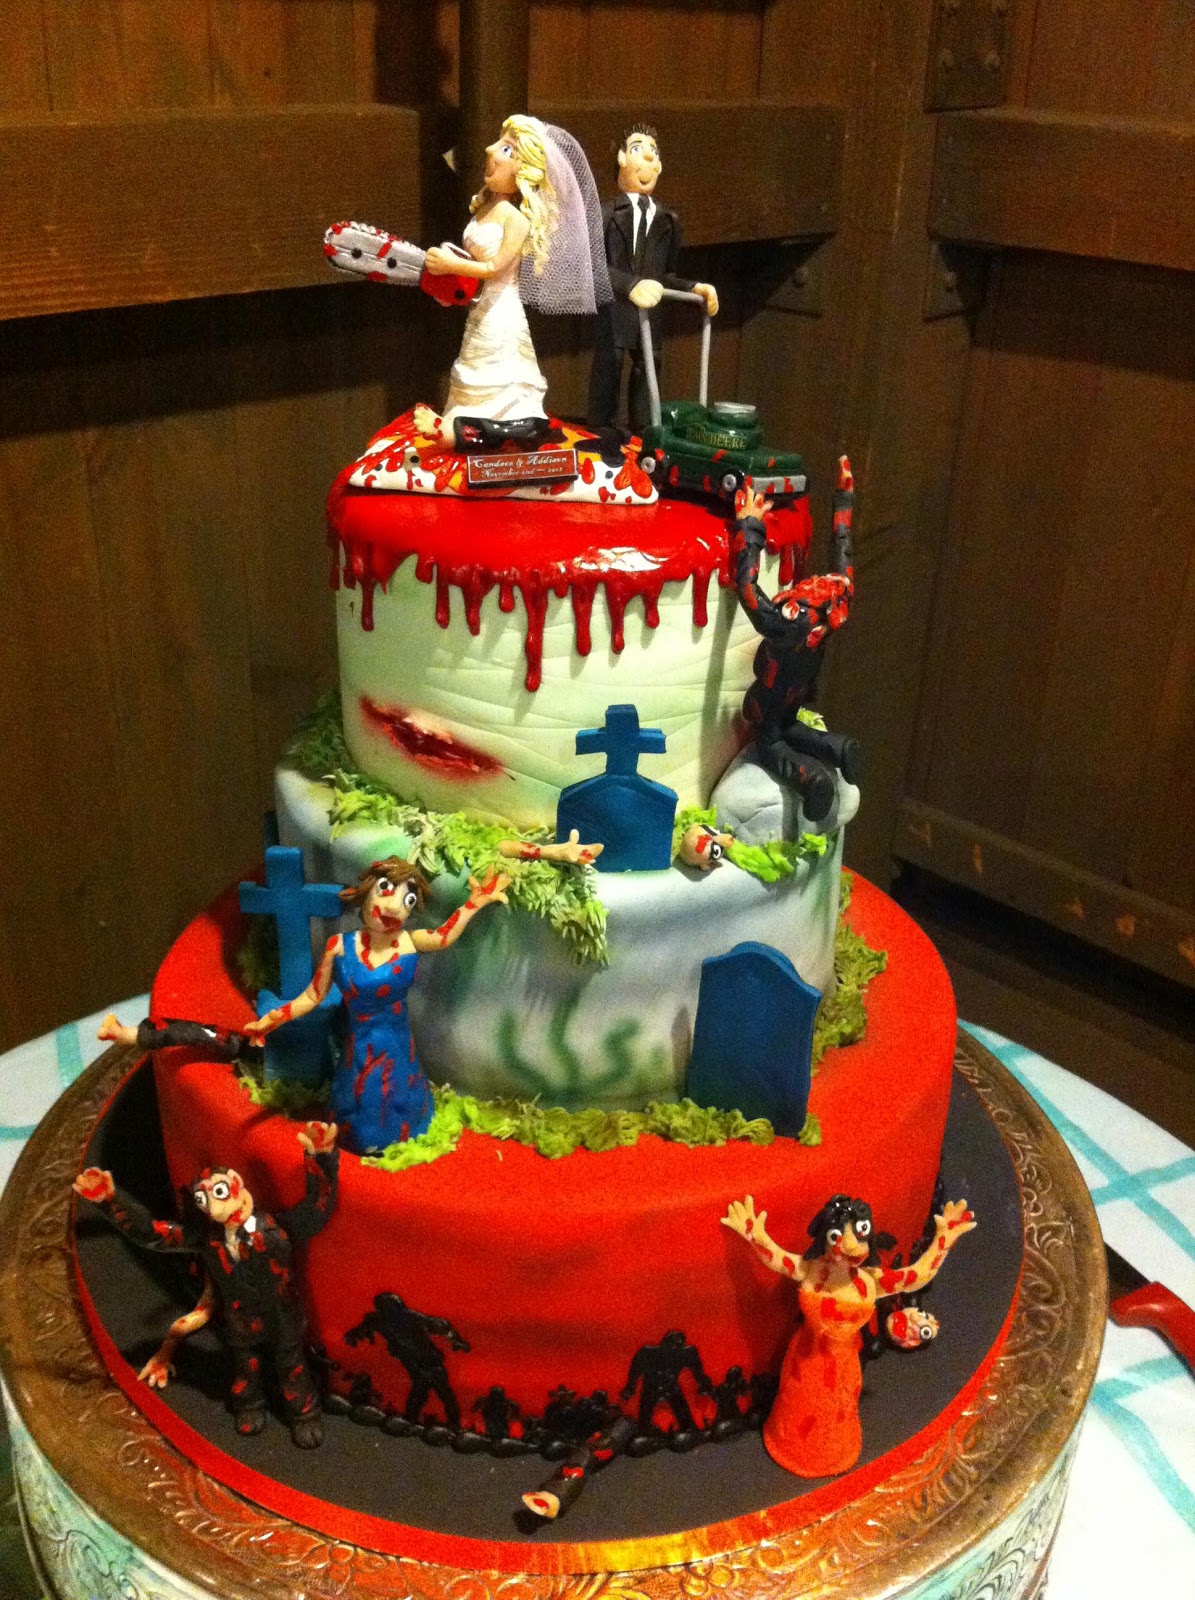 Geek Cake Friday: 21 Zombie Wedding Cakes